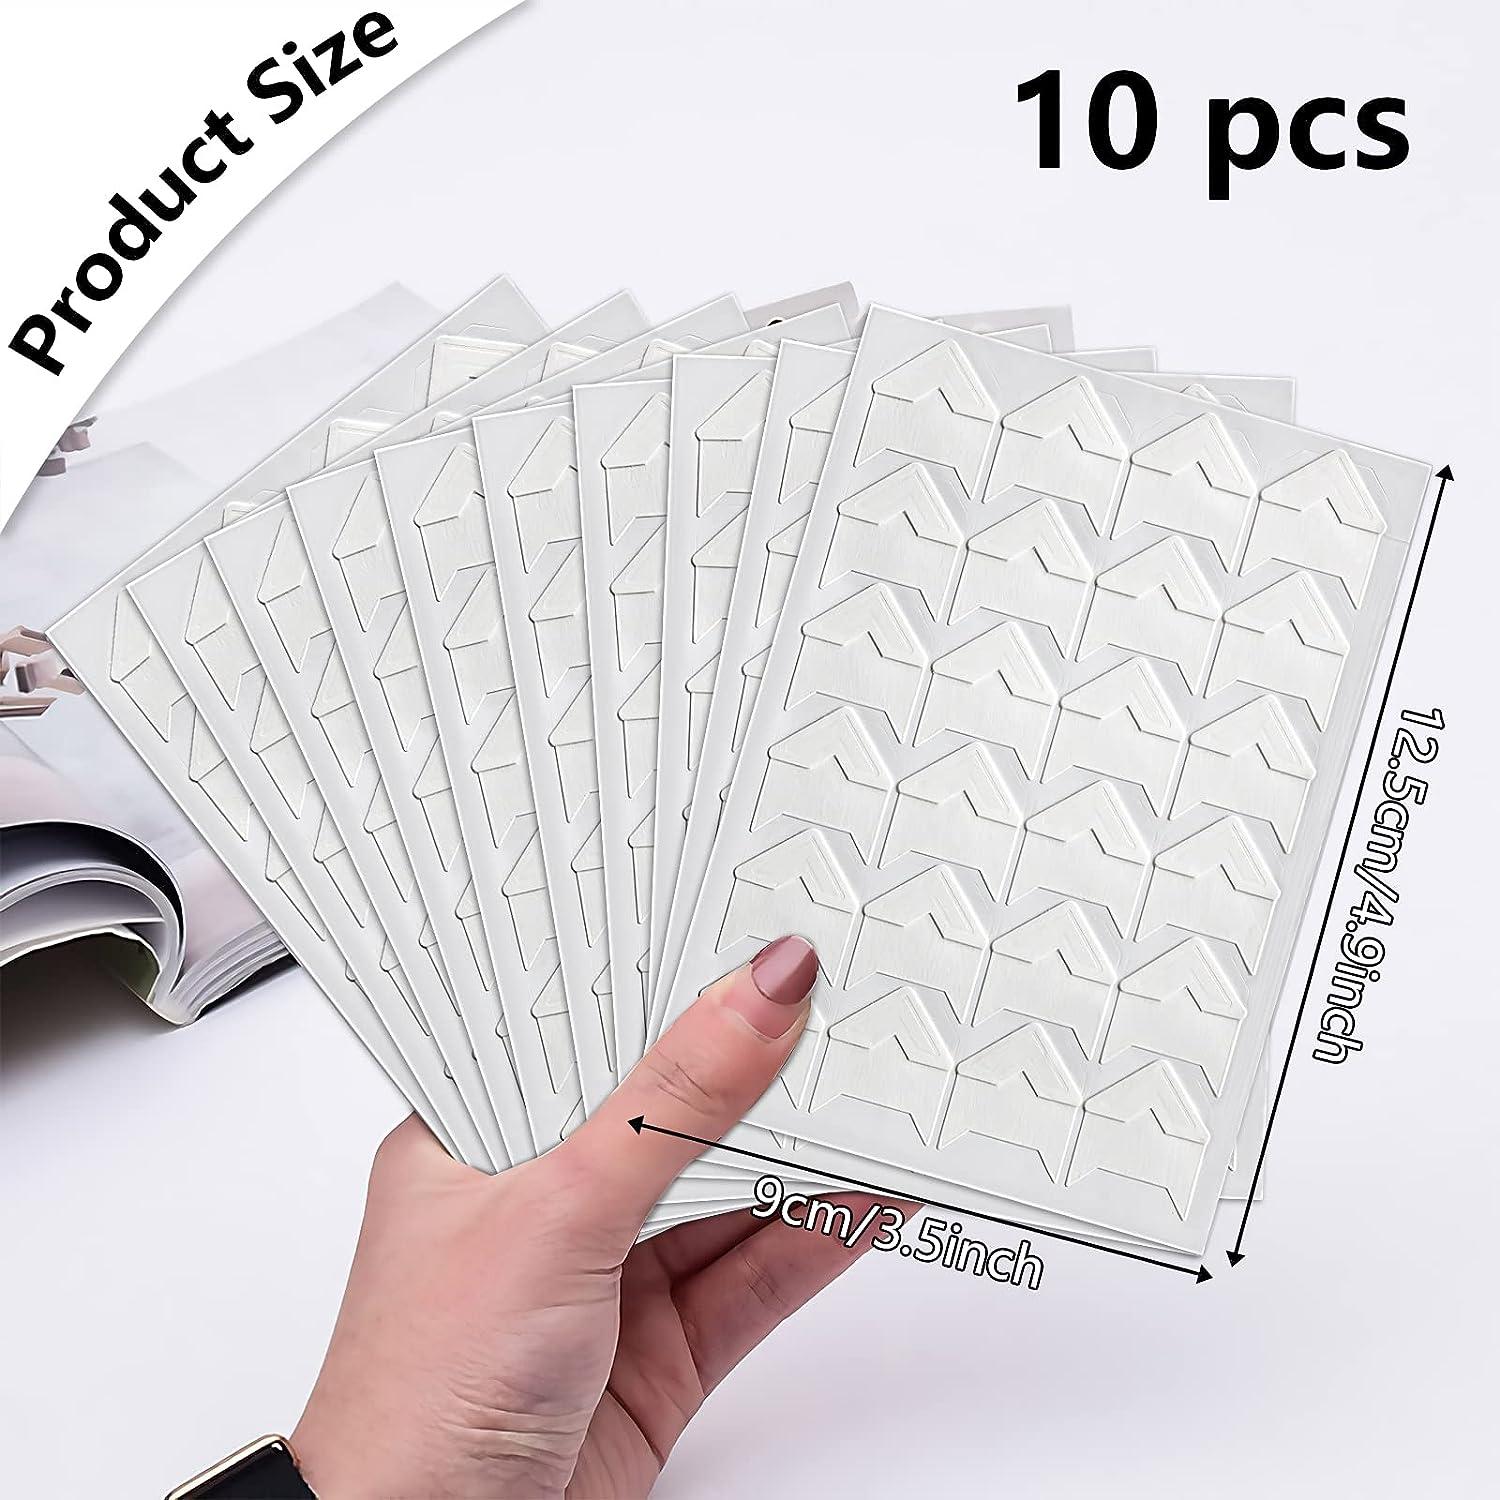 Scrapbook Adhesives Paper Photo Corners Self-Adhesive 108/PK - White